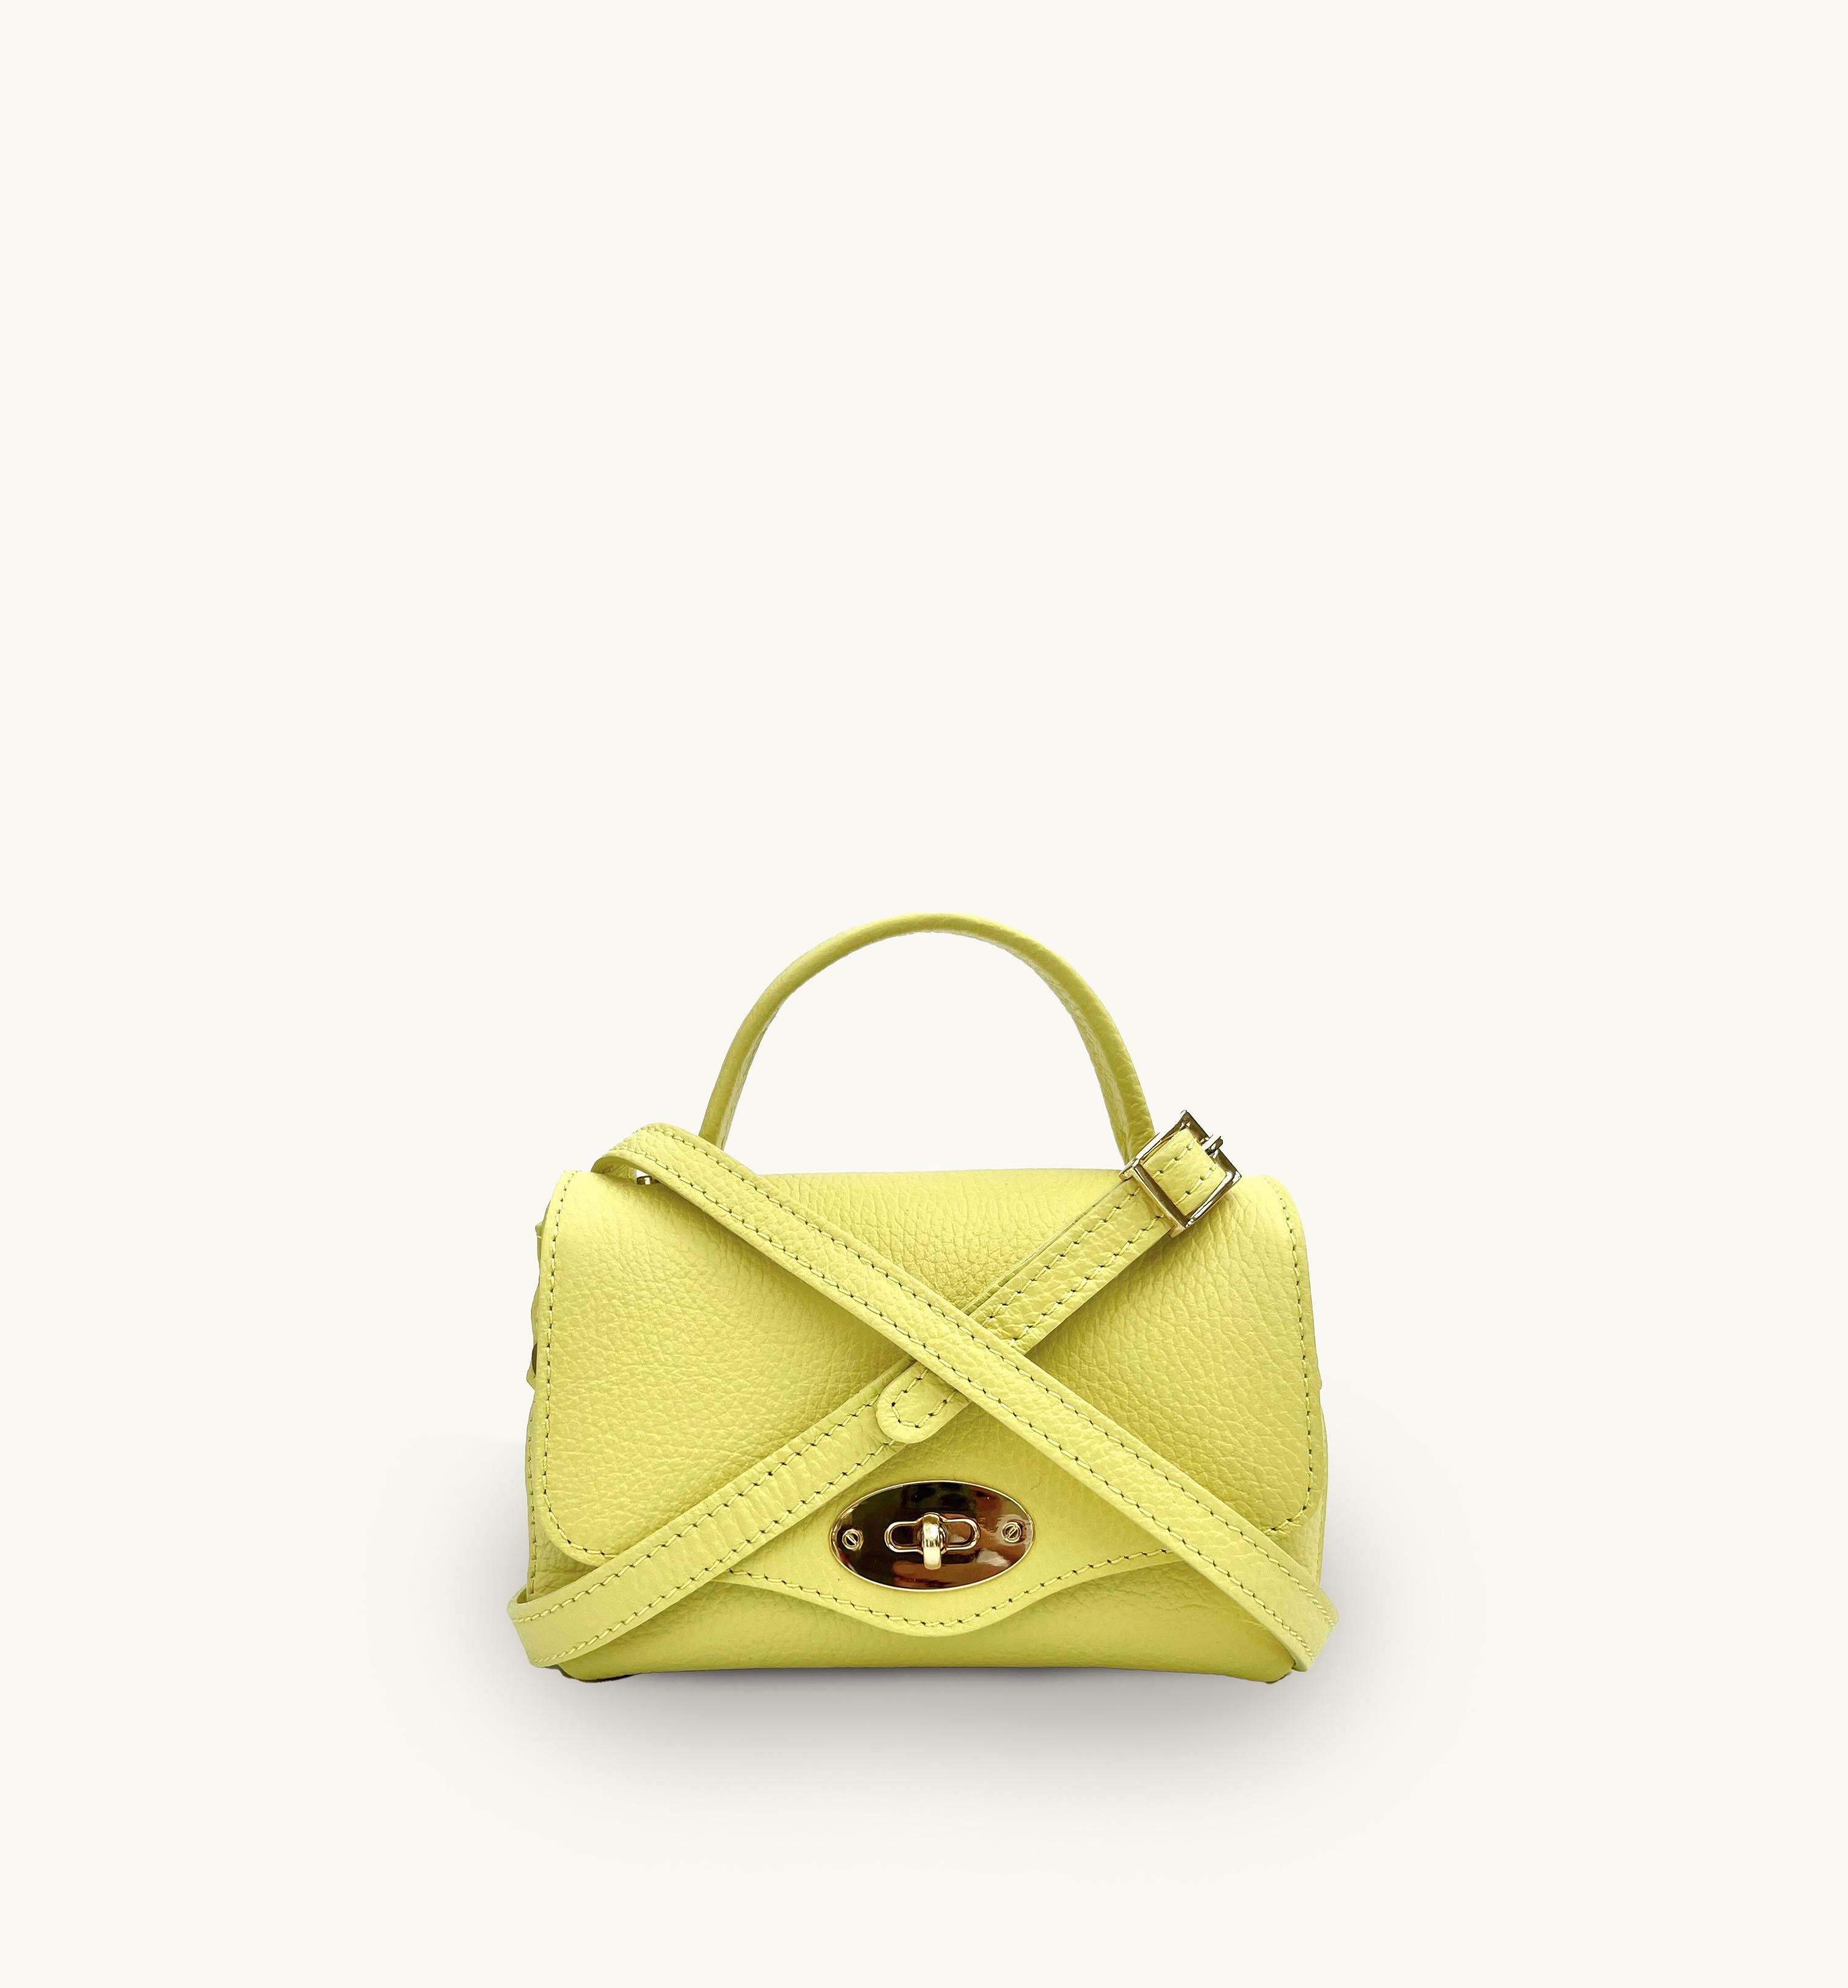 The Rachel Lemon Leather Bag